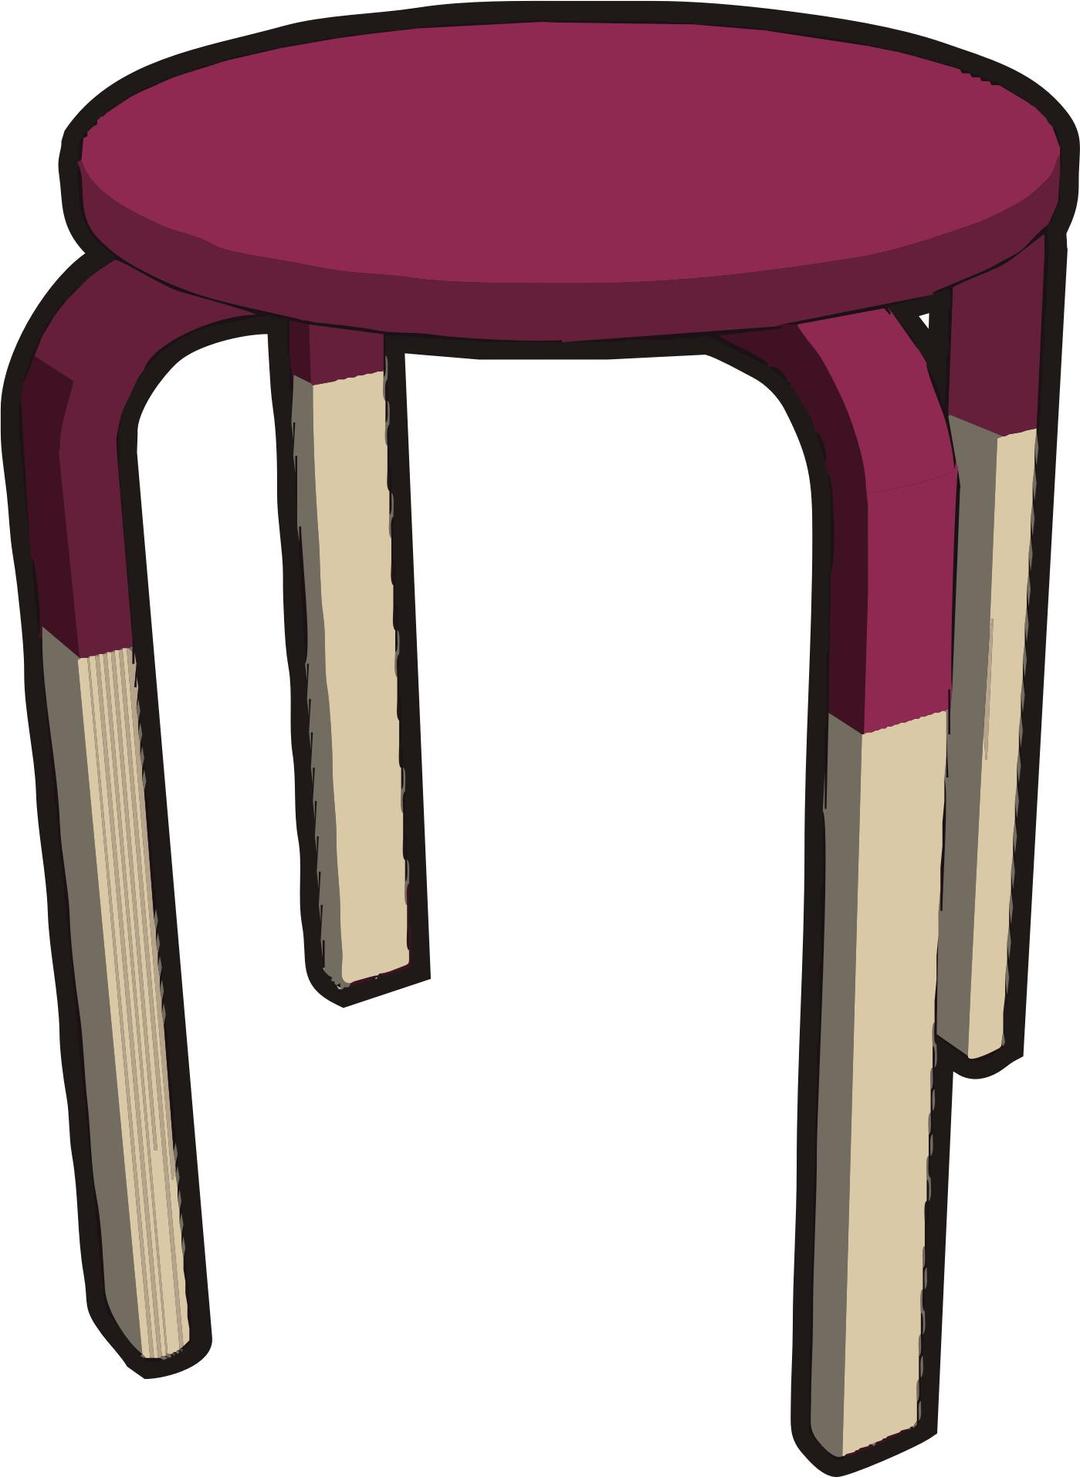 Ikea stuff - Frosta stool, half burgundi png transparent